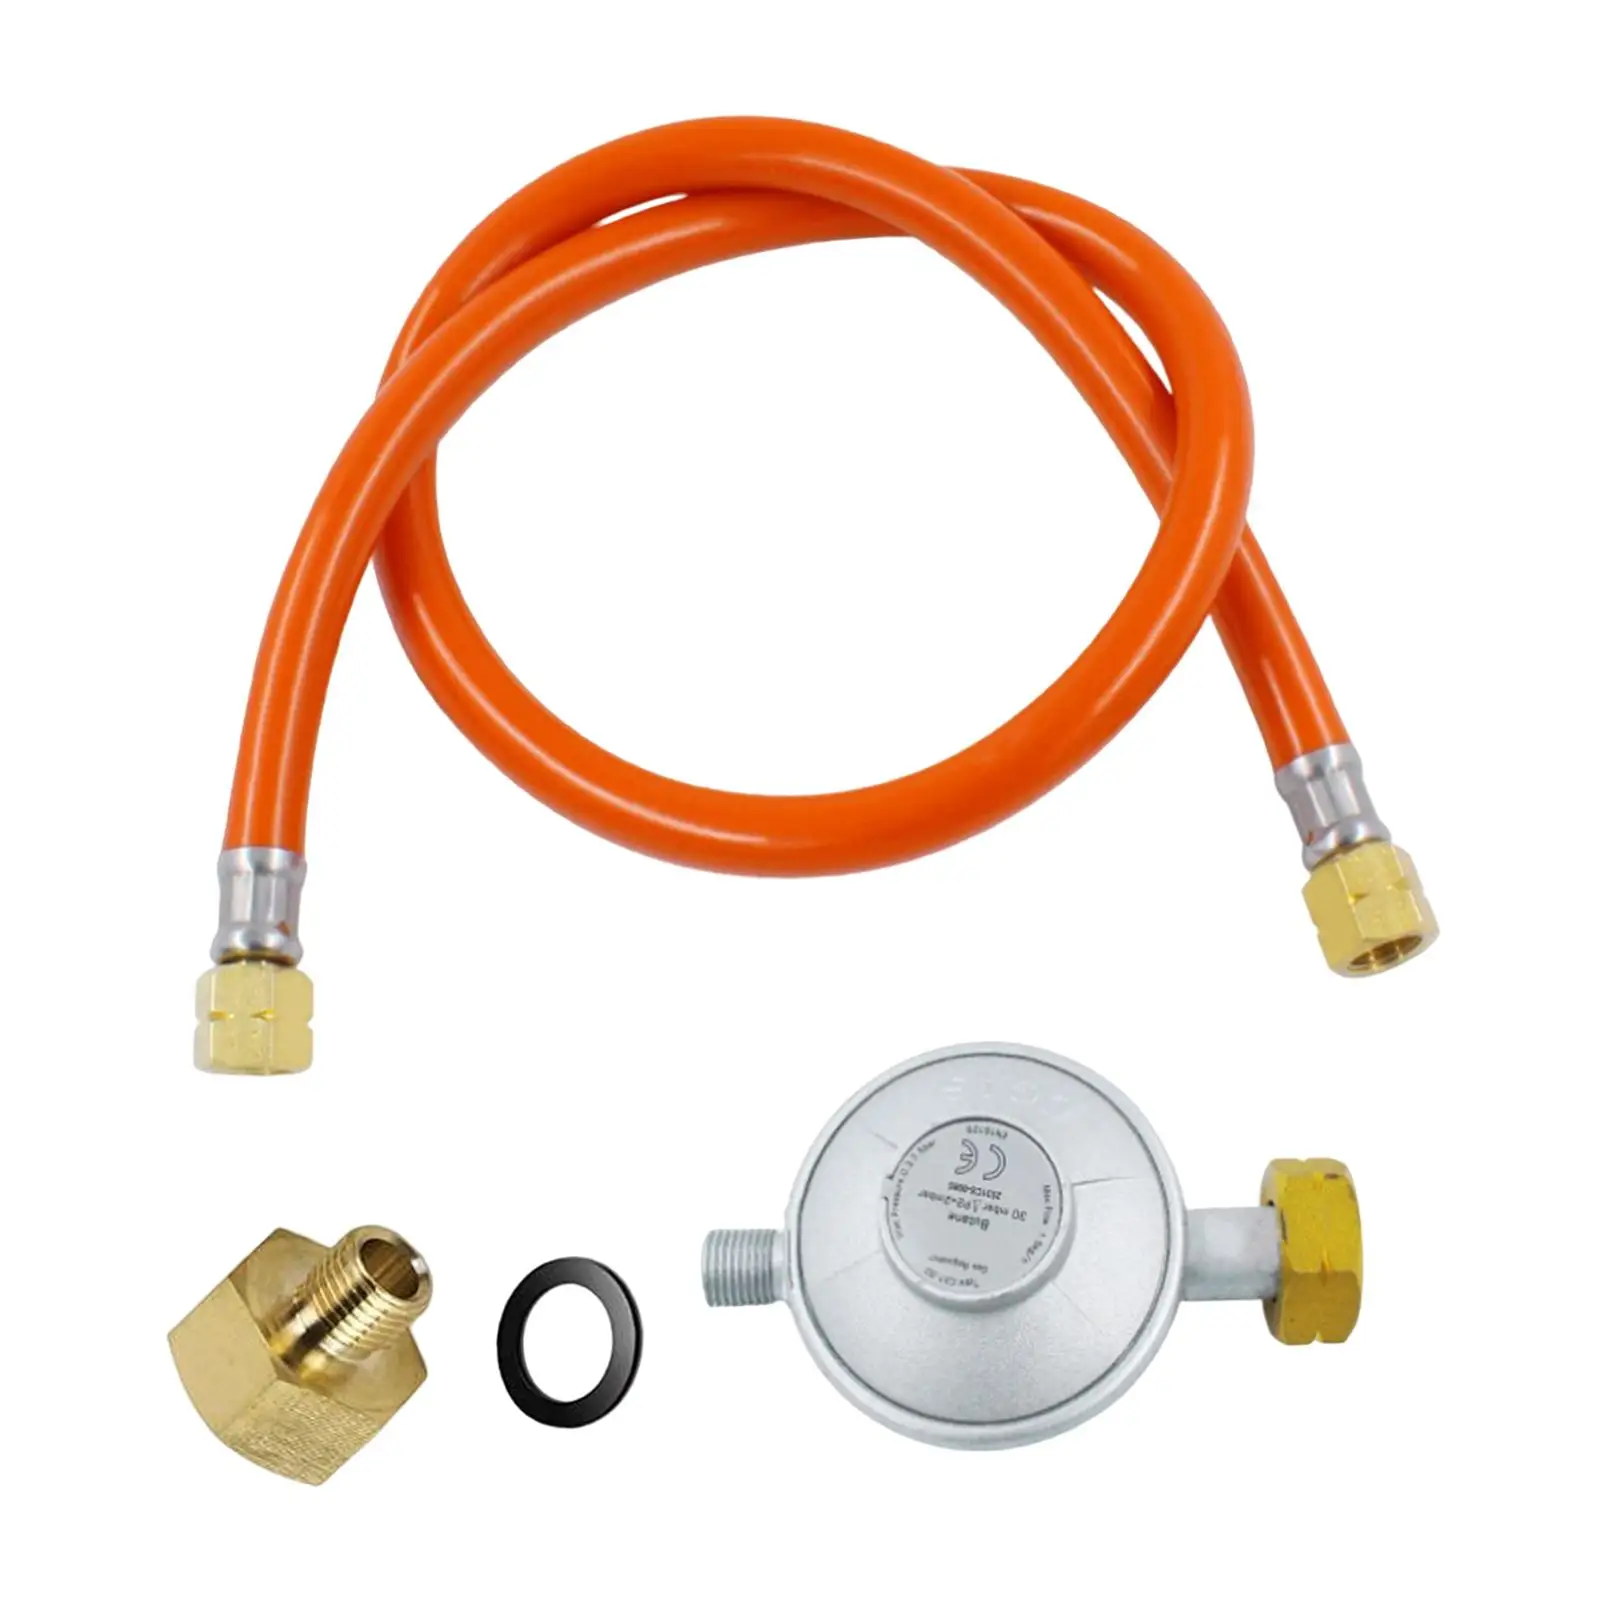 Low Pressure Hose and Regulator Kit Accessories Connector 5ft Hose Metal Part 1/2